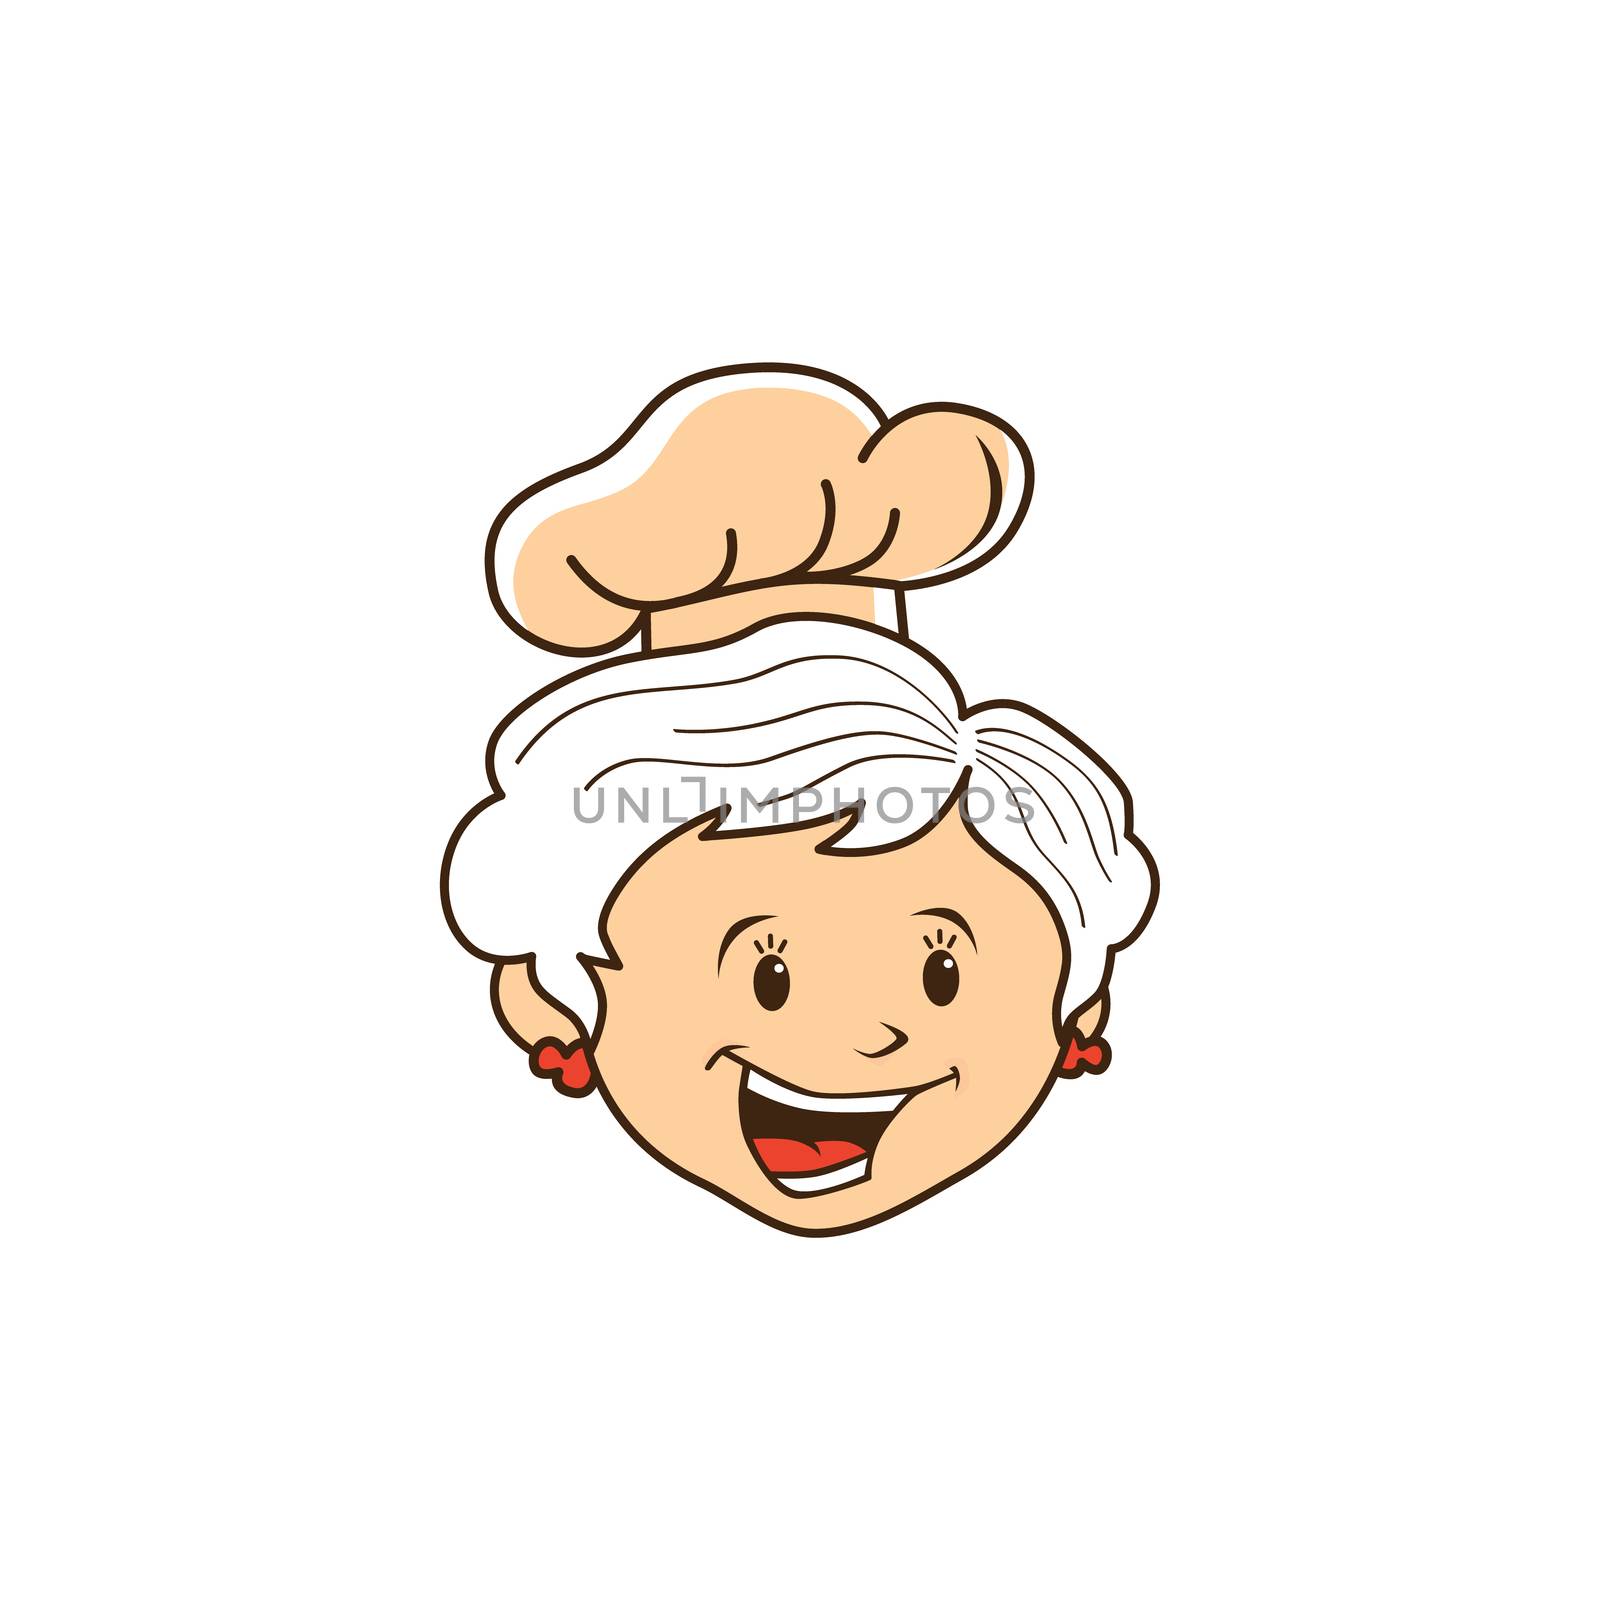 grandma chef cartoon theme vector art illustration